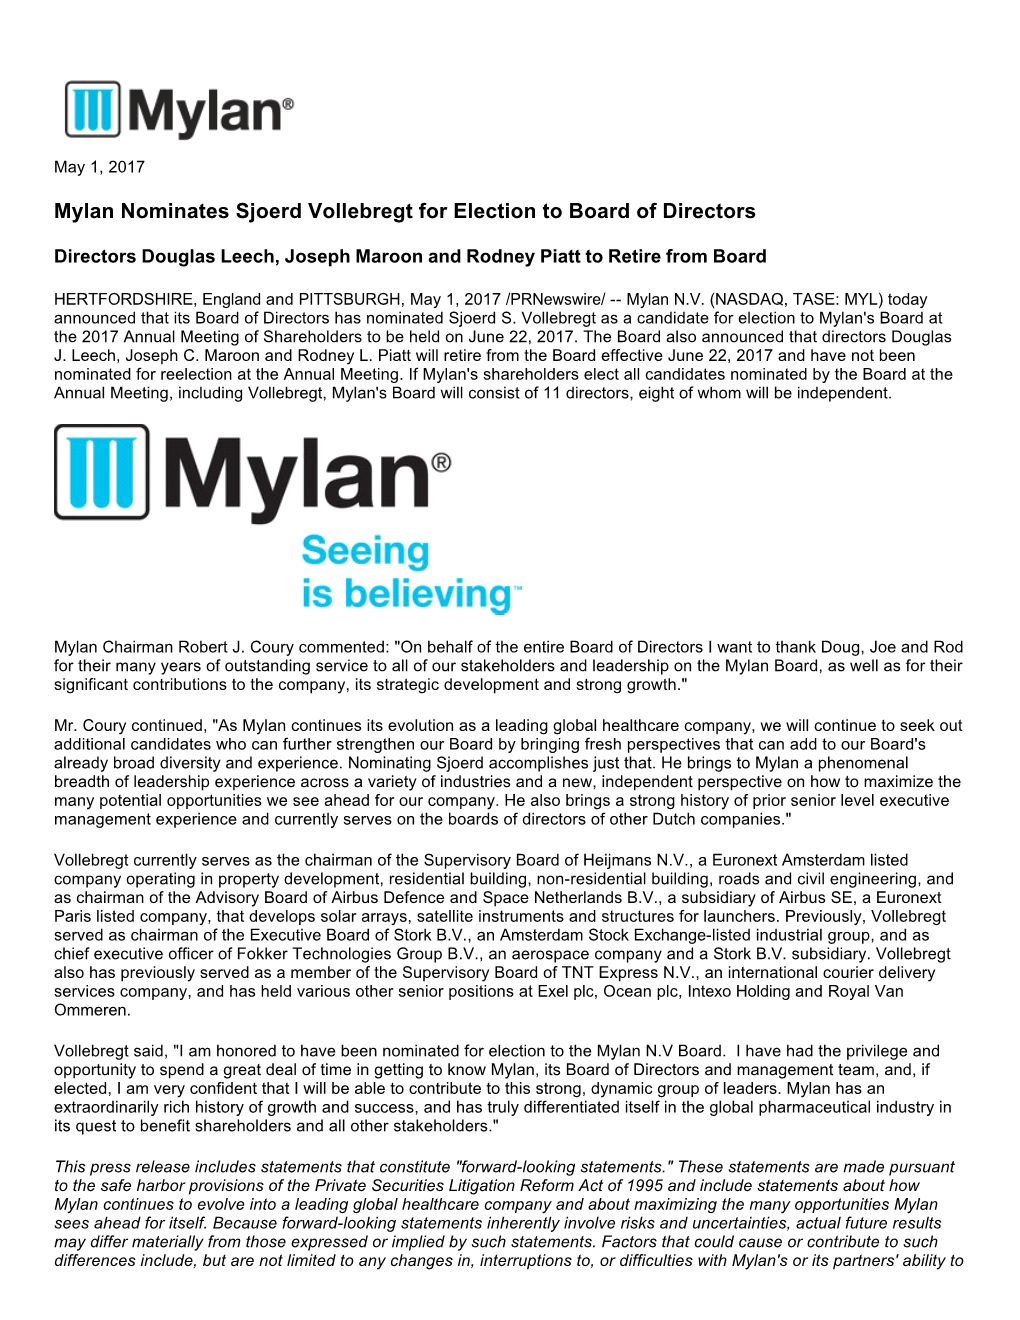 Mylan Nominates Sjoerd Vollebregt for Election to Board of Directors